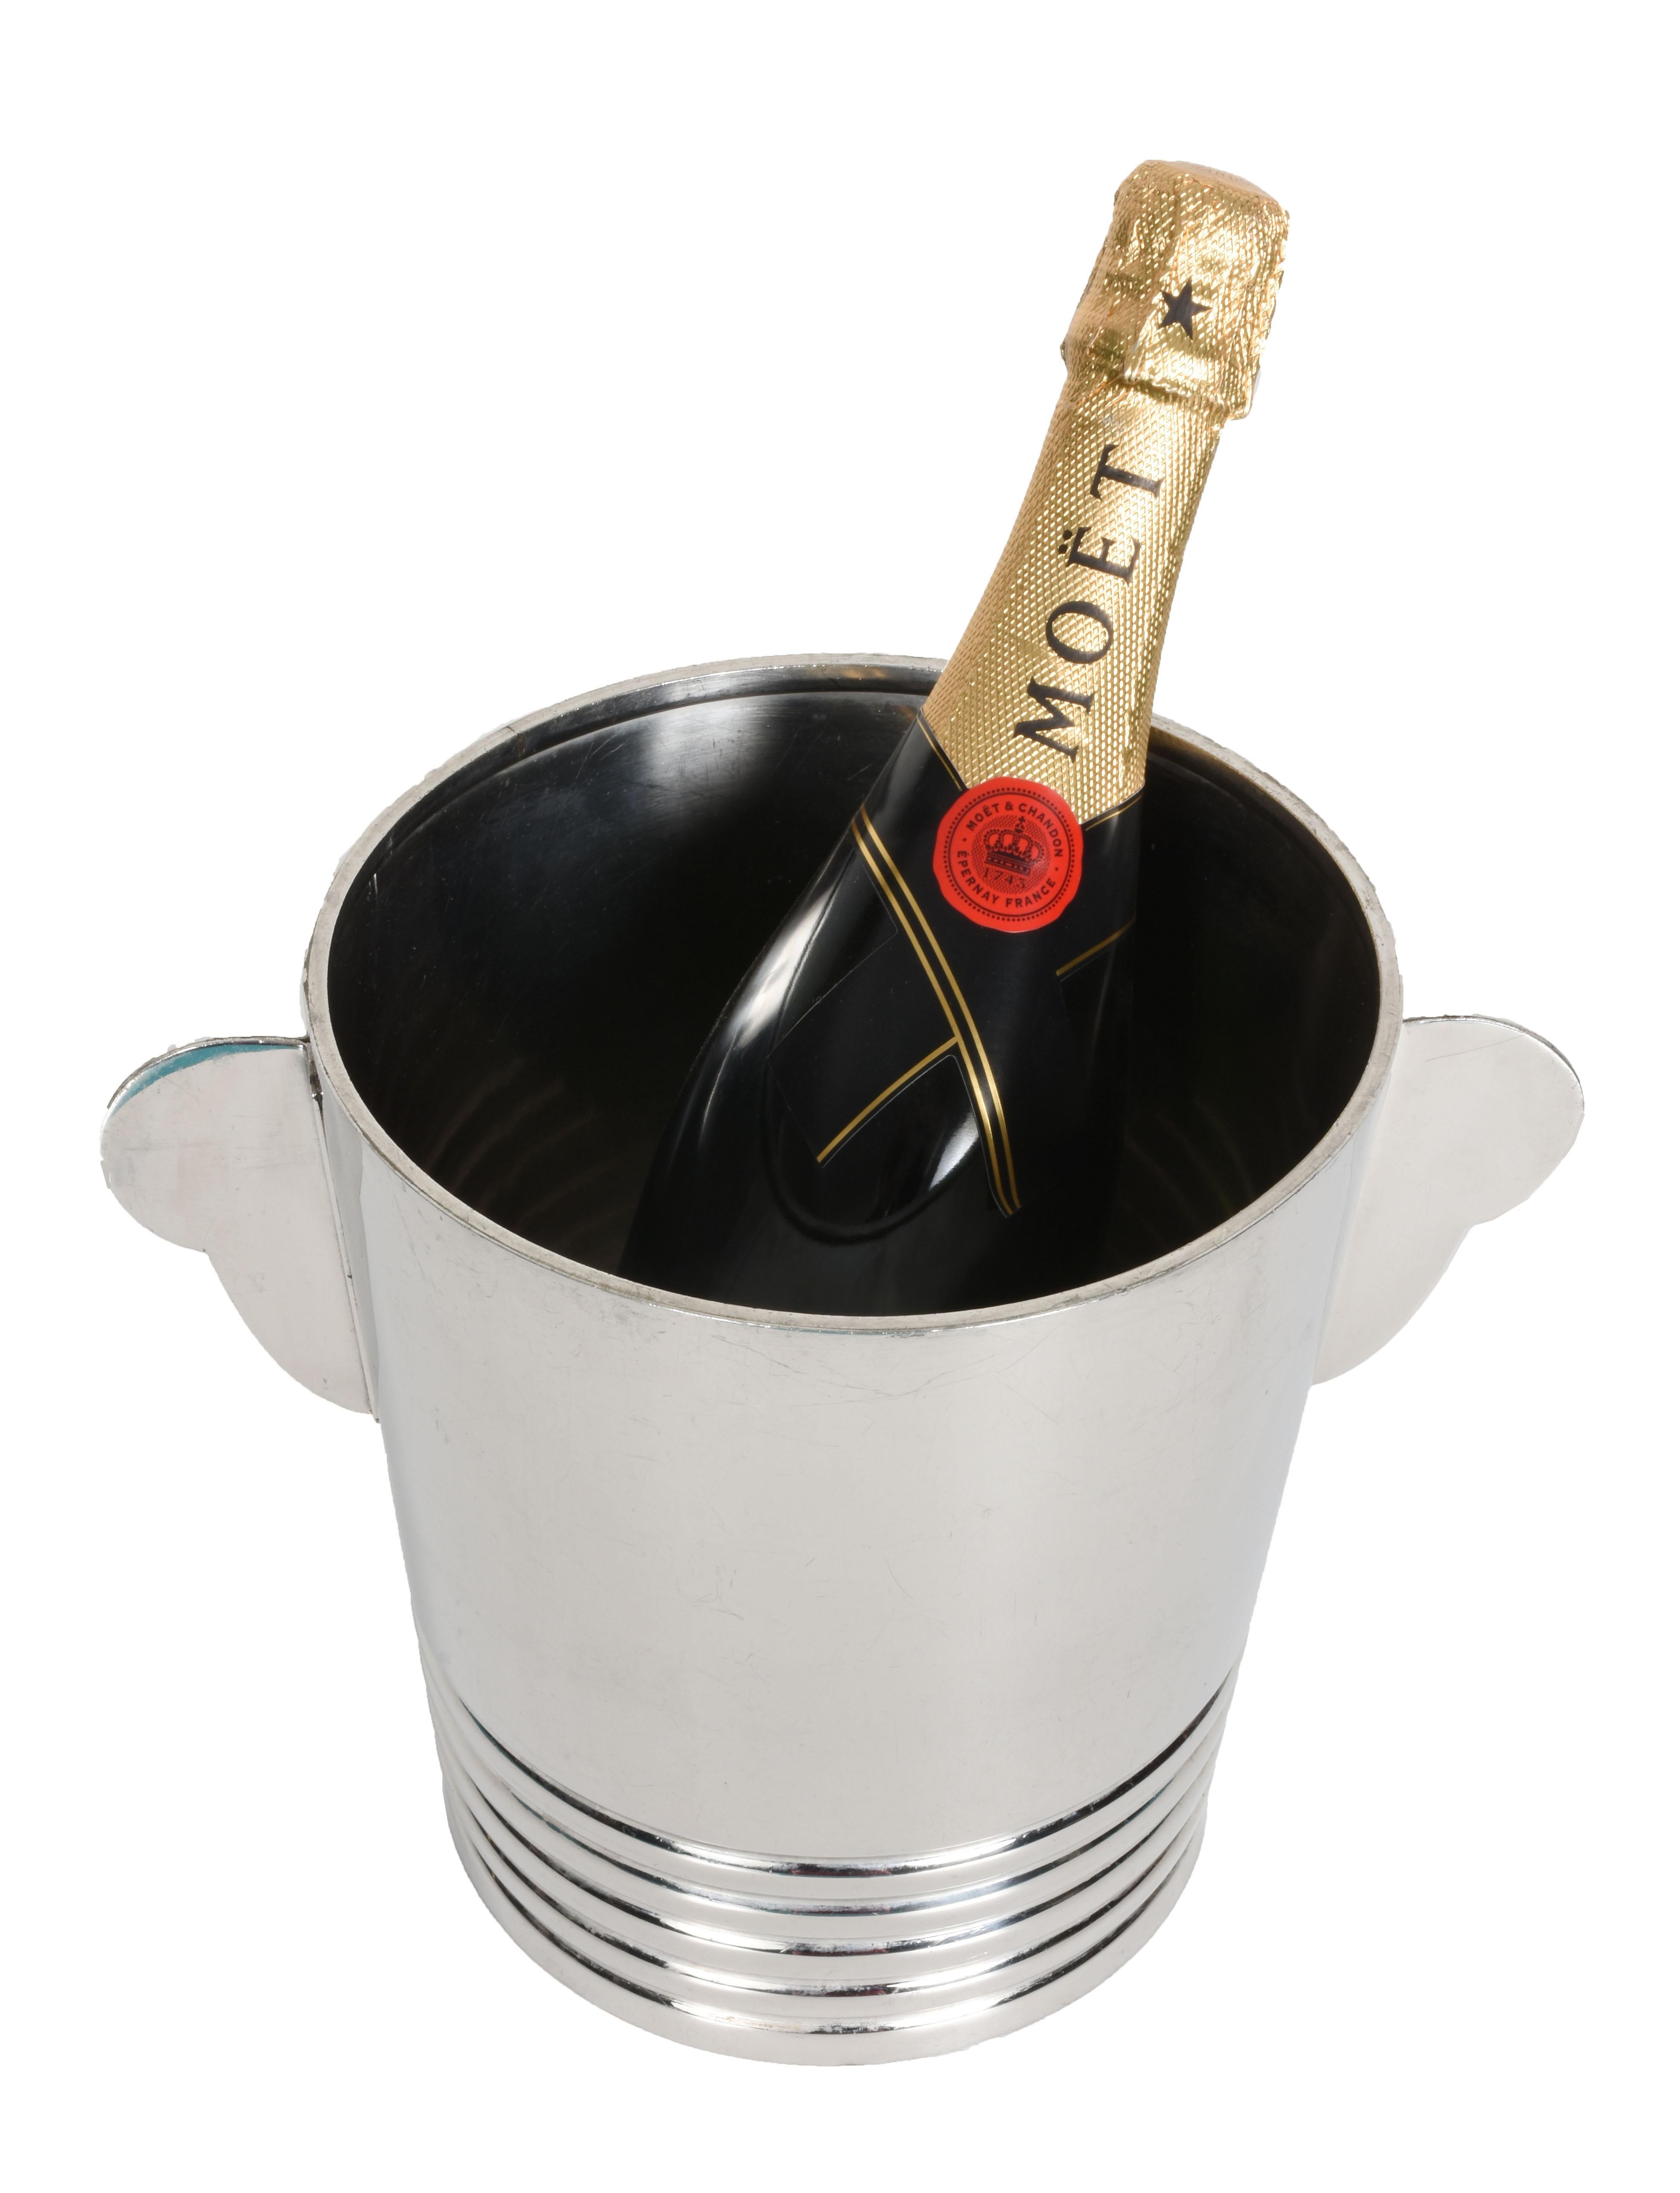 Beautiful steel champagne bucket by Gio Ponti design for Fratelli Calderoni.